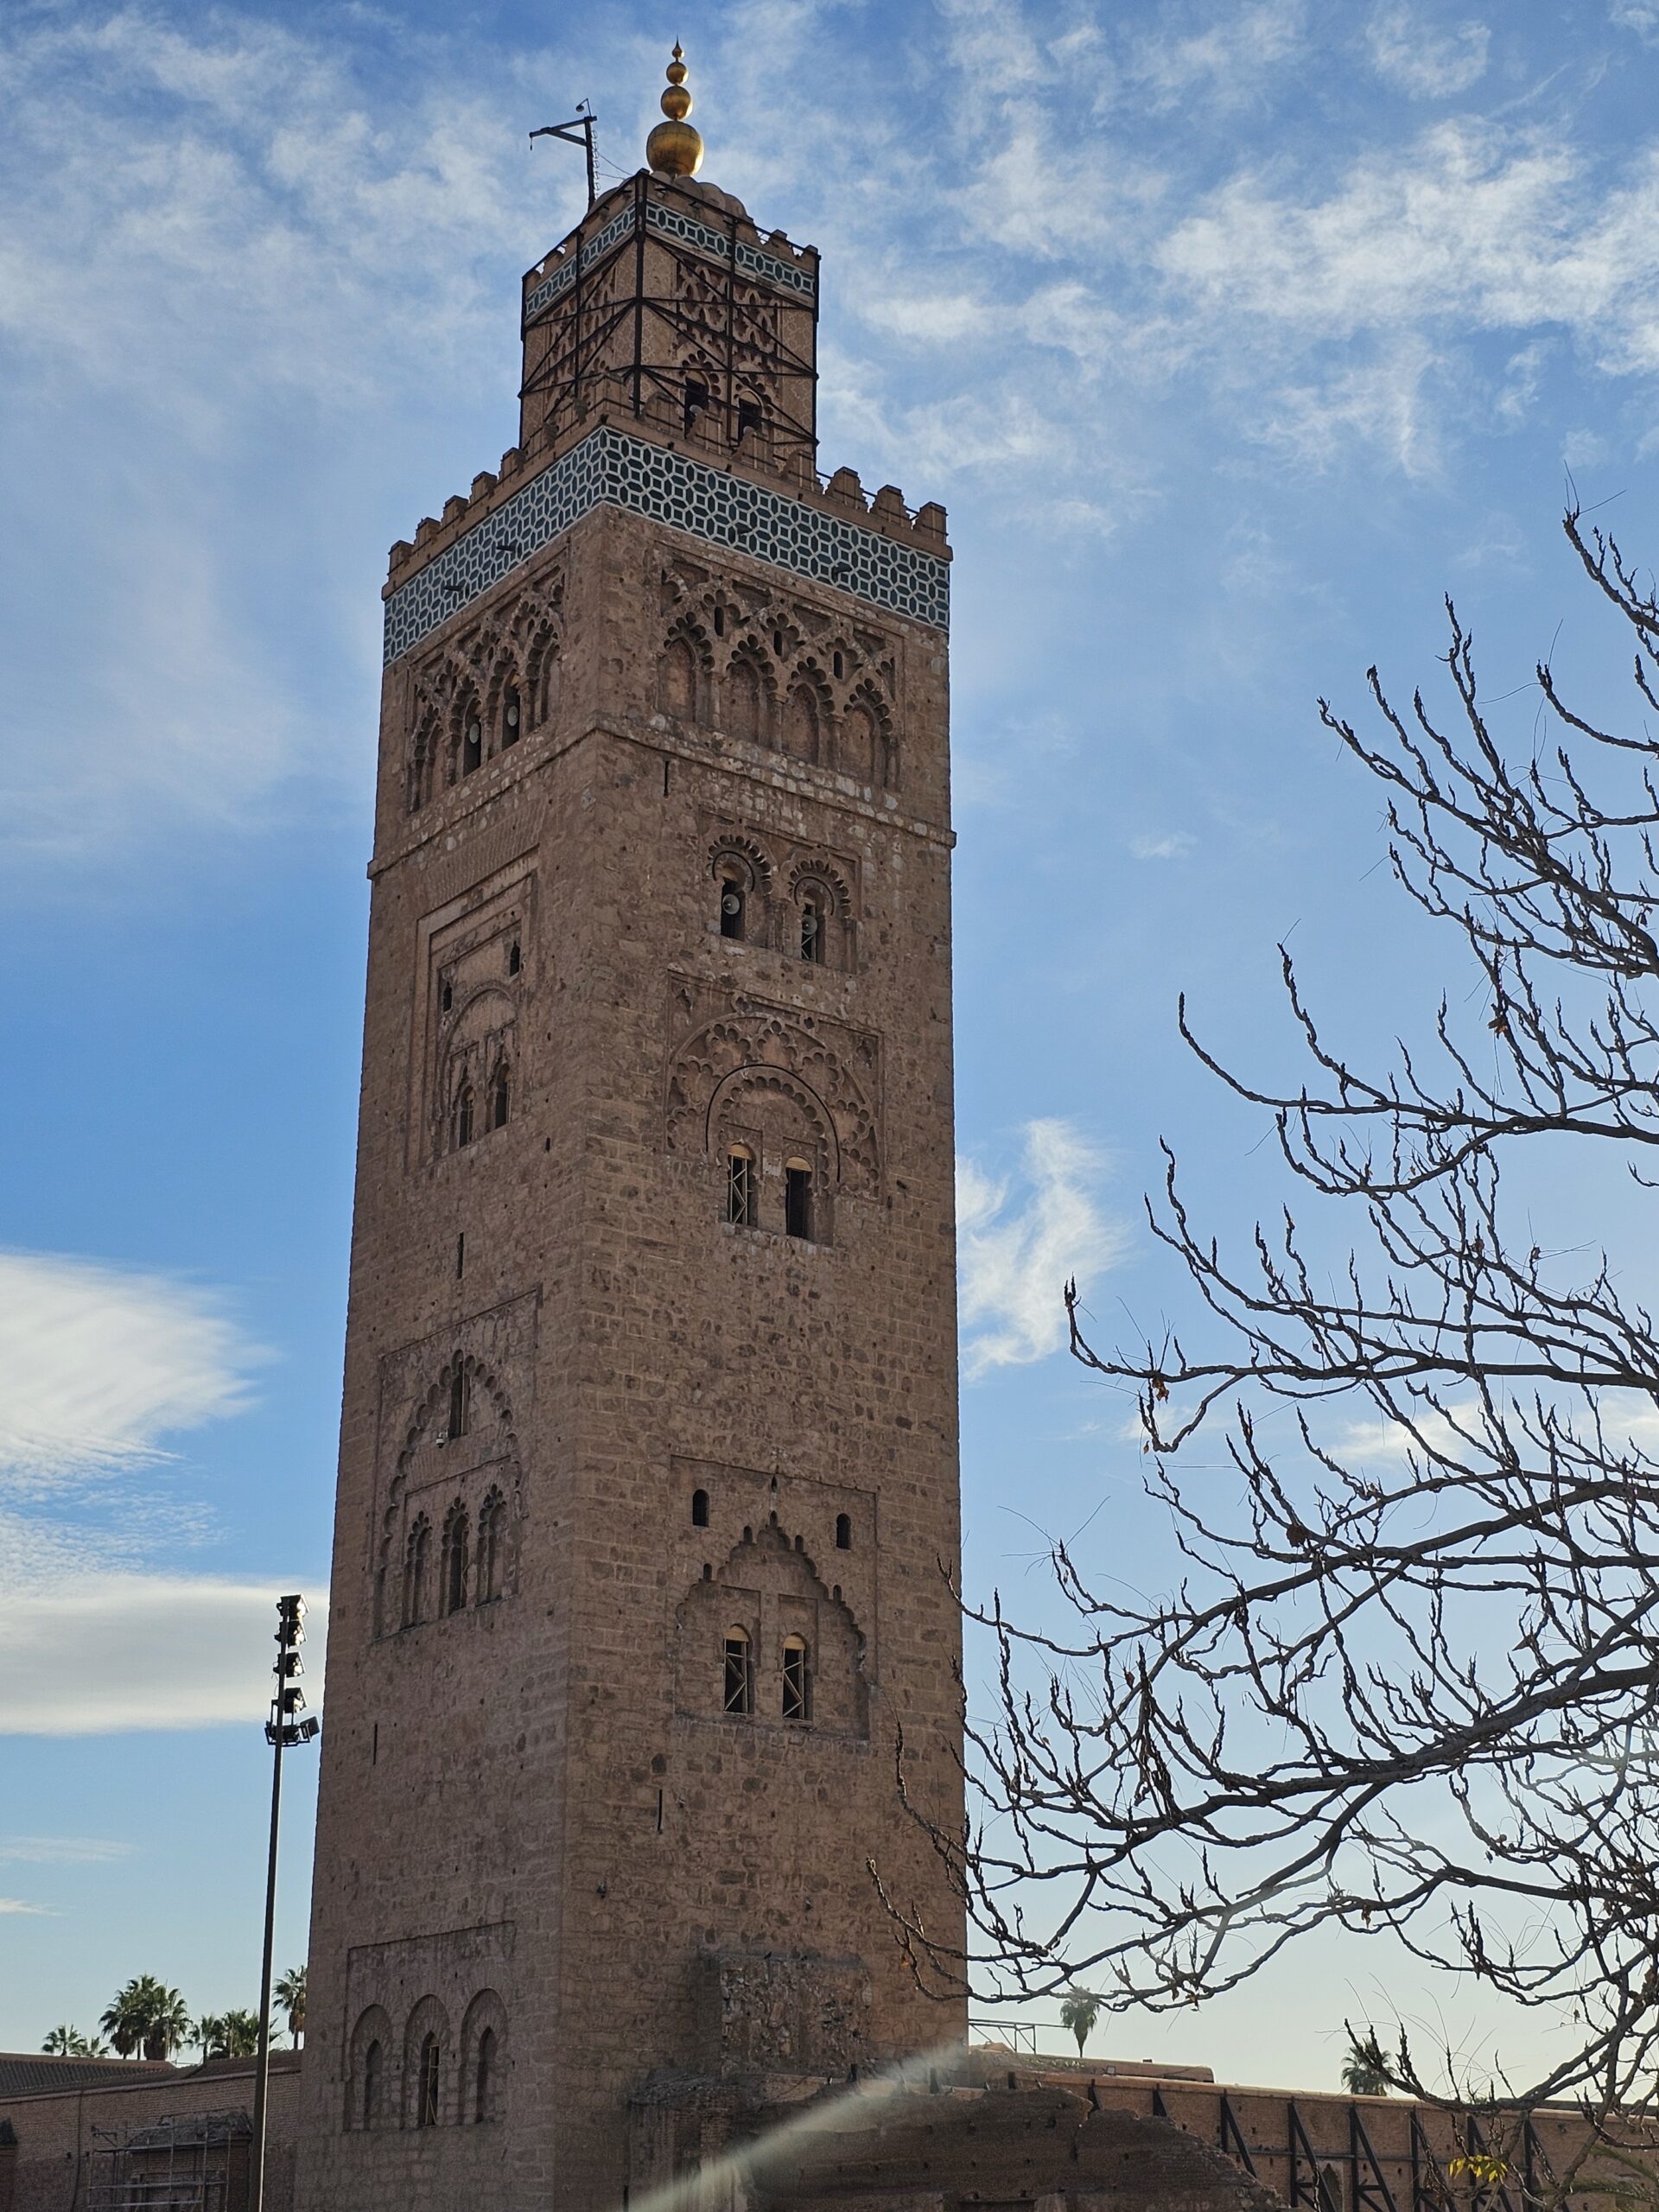 Minaret of the 12th century Koutoubia Mosque, Marrakesh. Image 360onhistory.com